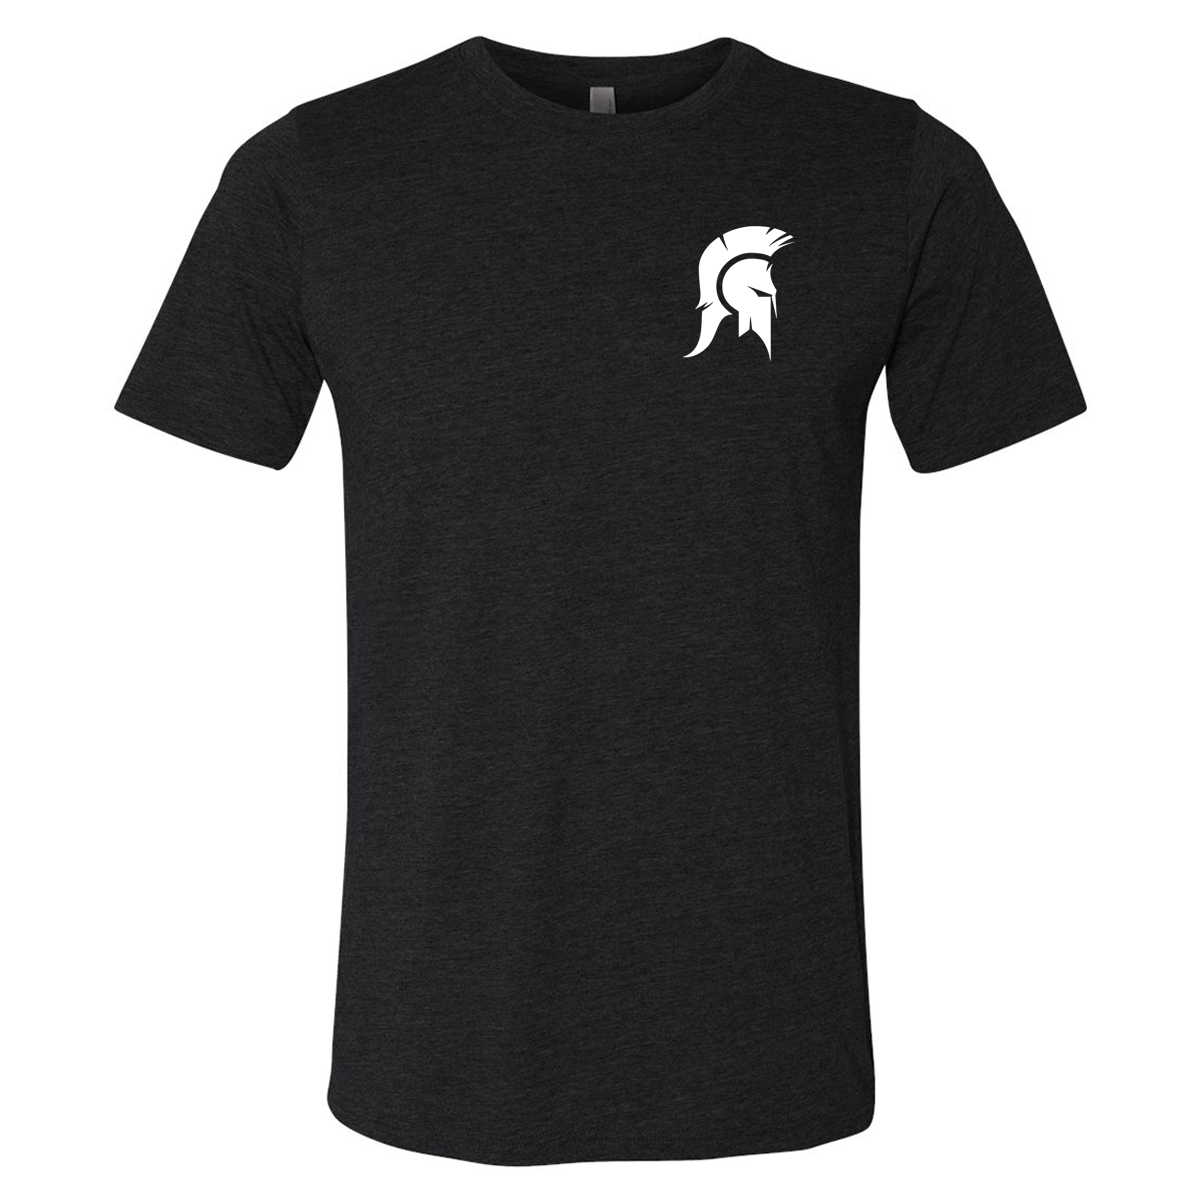 Titan Fit - Roanoke - T-Shirt - Black - Front